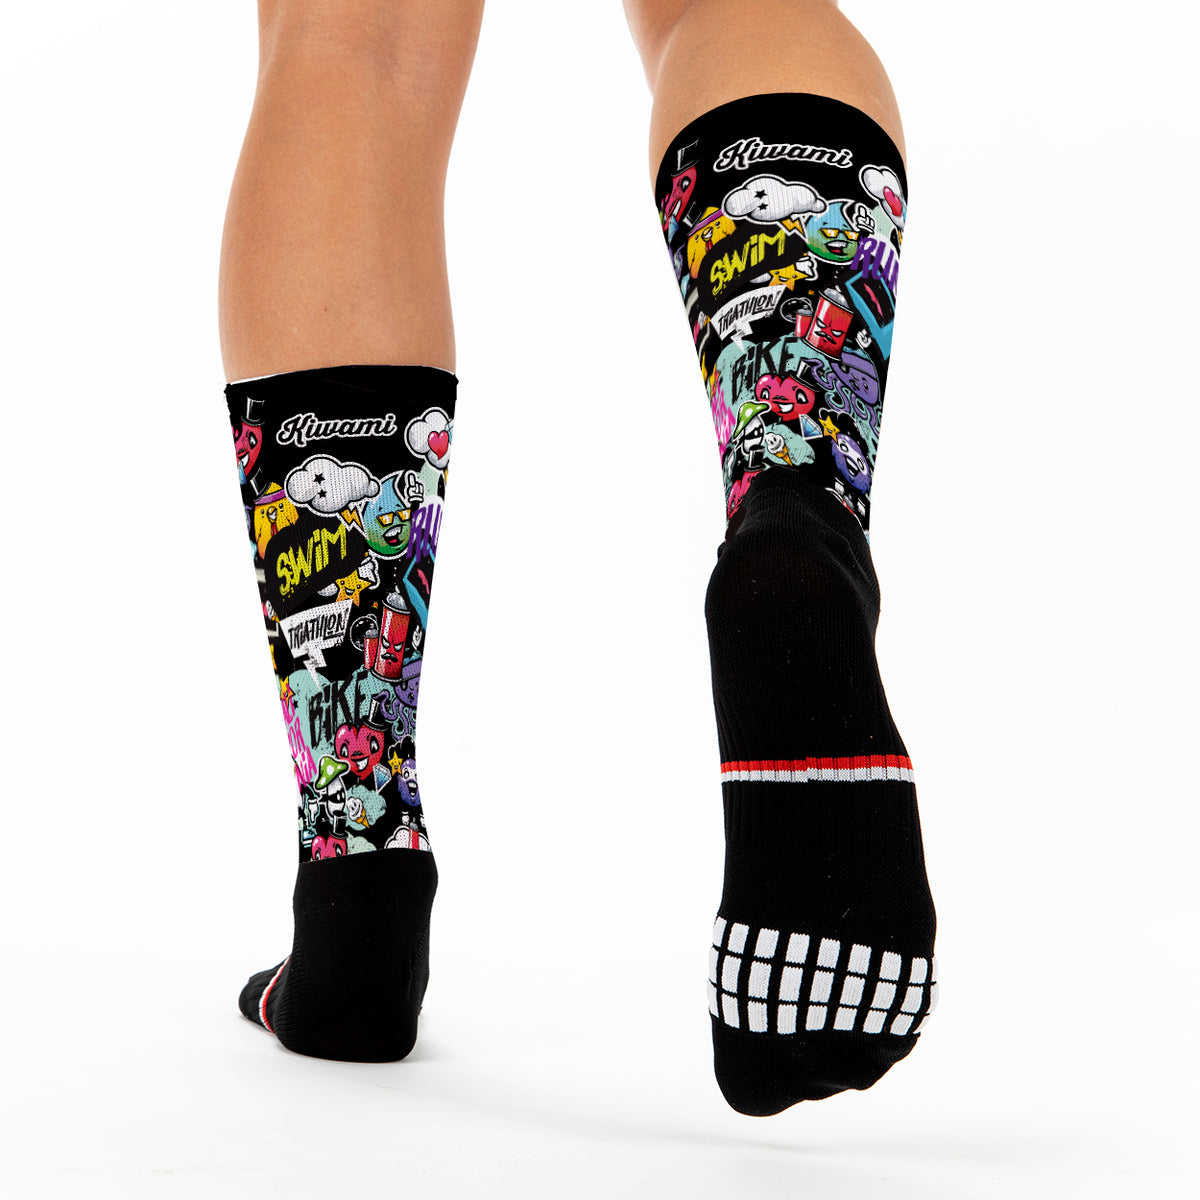 Venice new triathlon/running sock The ultimate running socks for training and racing kiwami_sports 